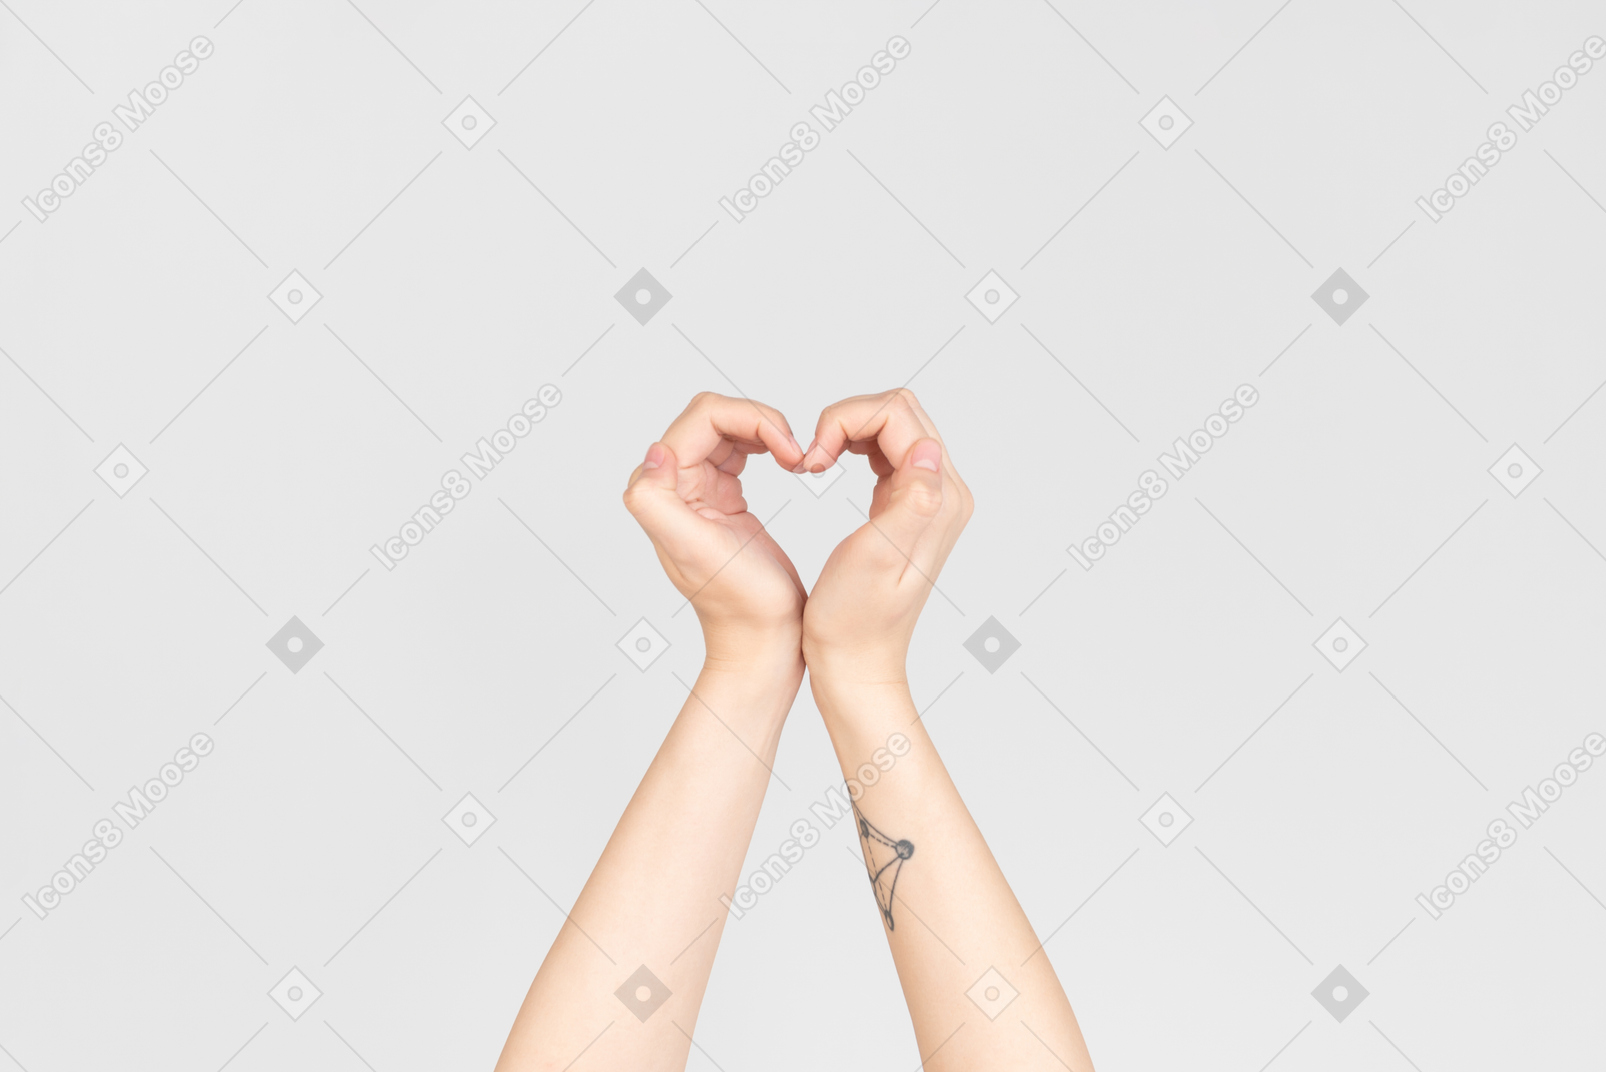 Female hands making a heart